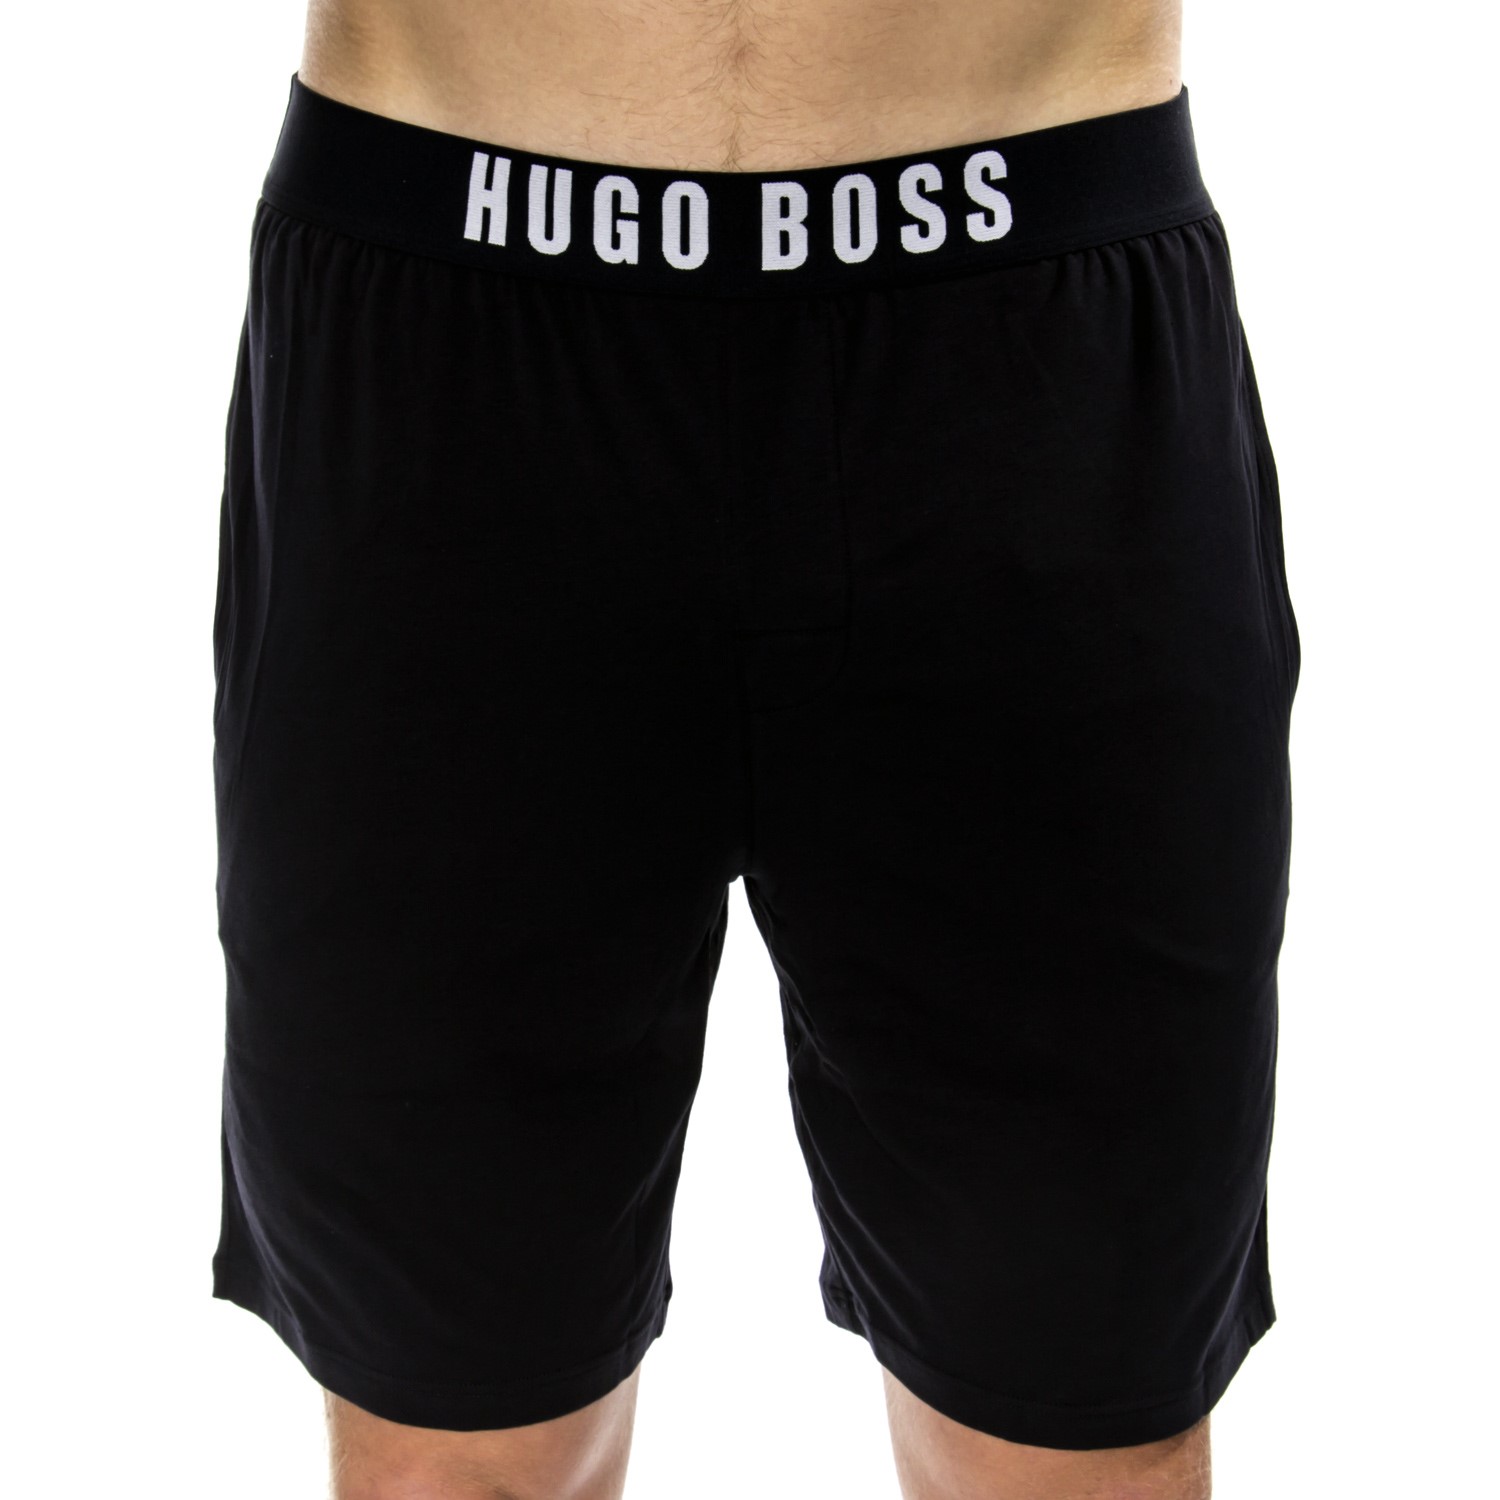 Hugo Boss Identity Shorts - Shorts 